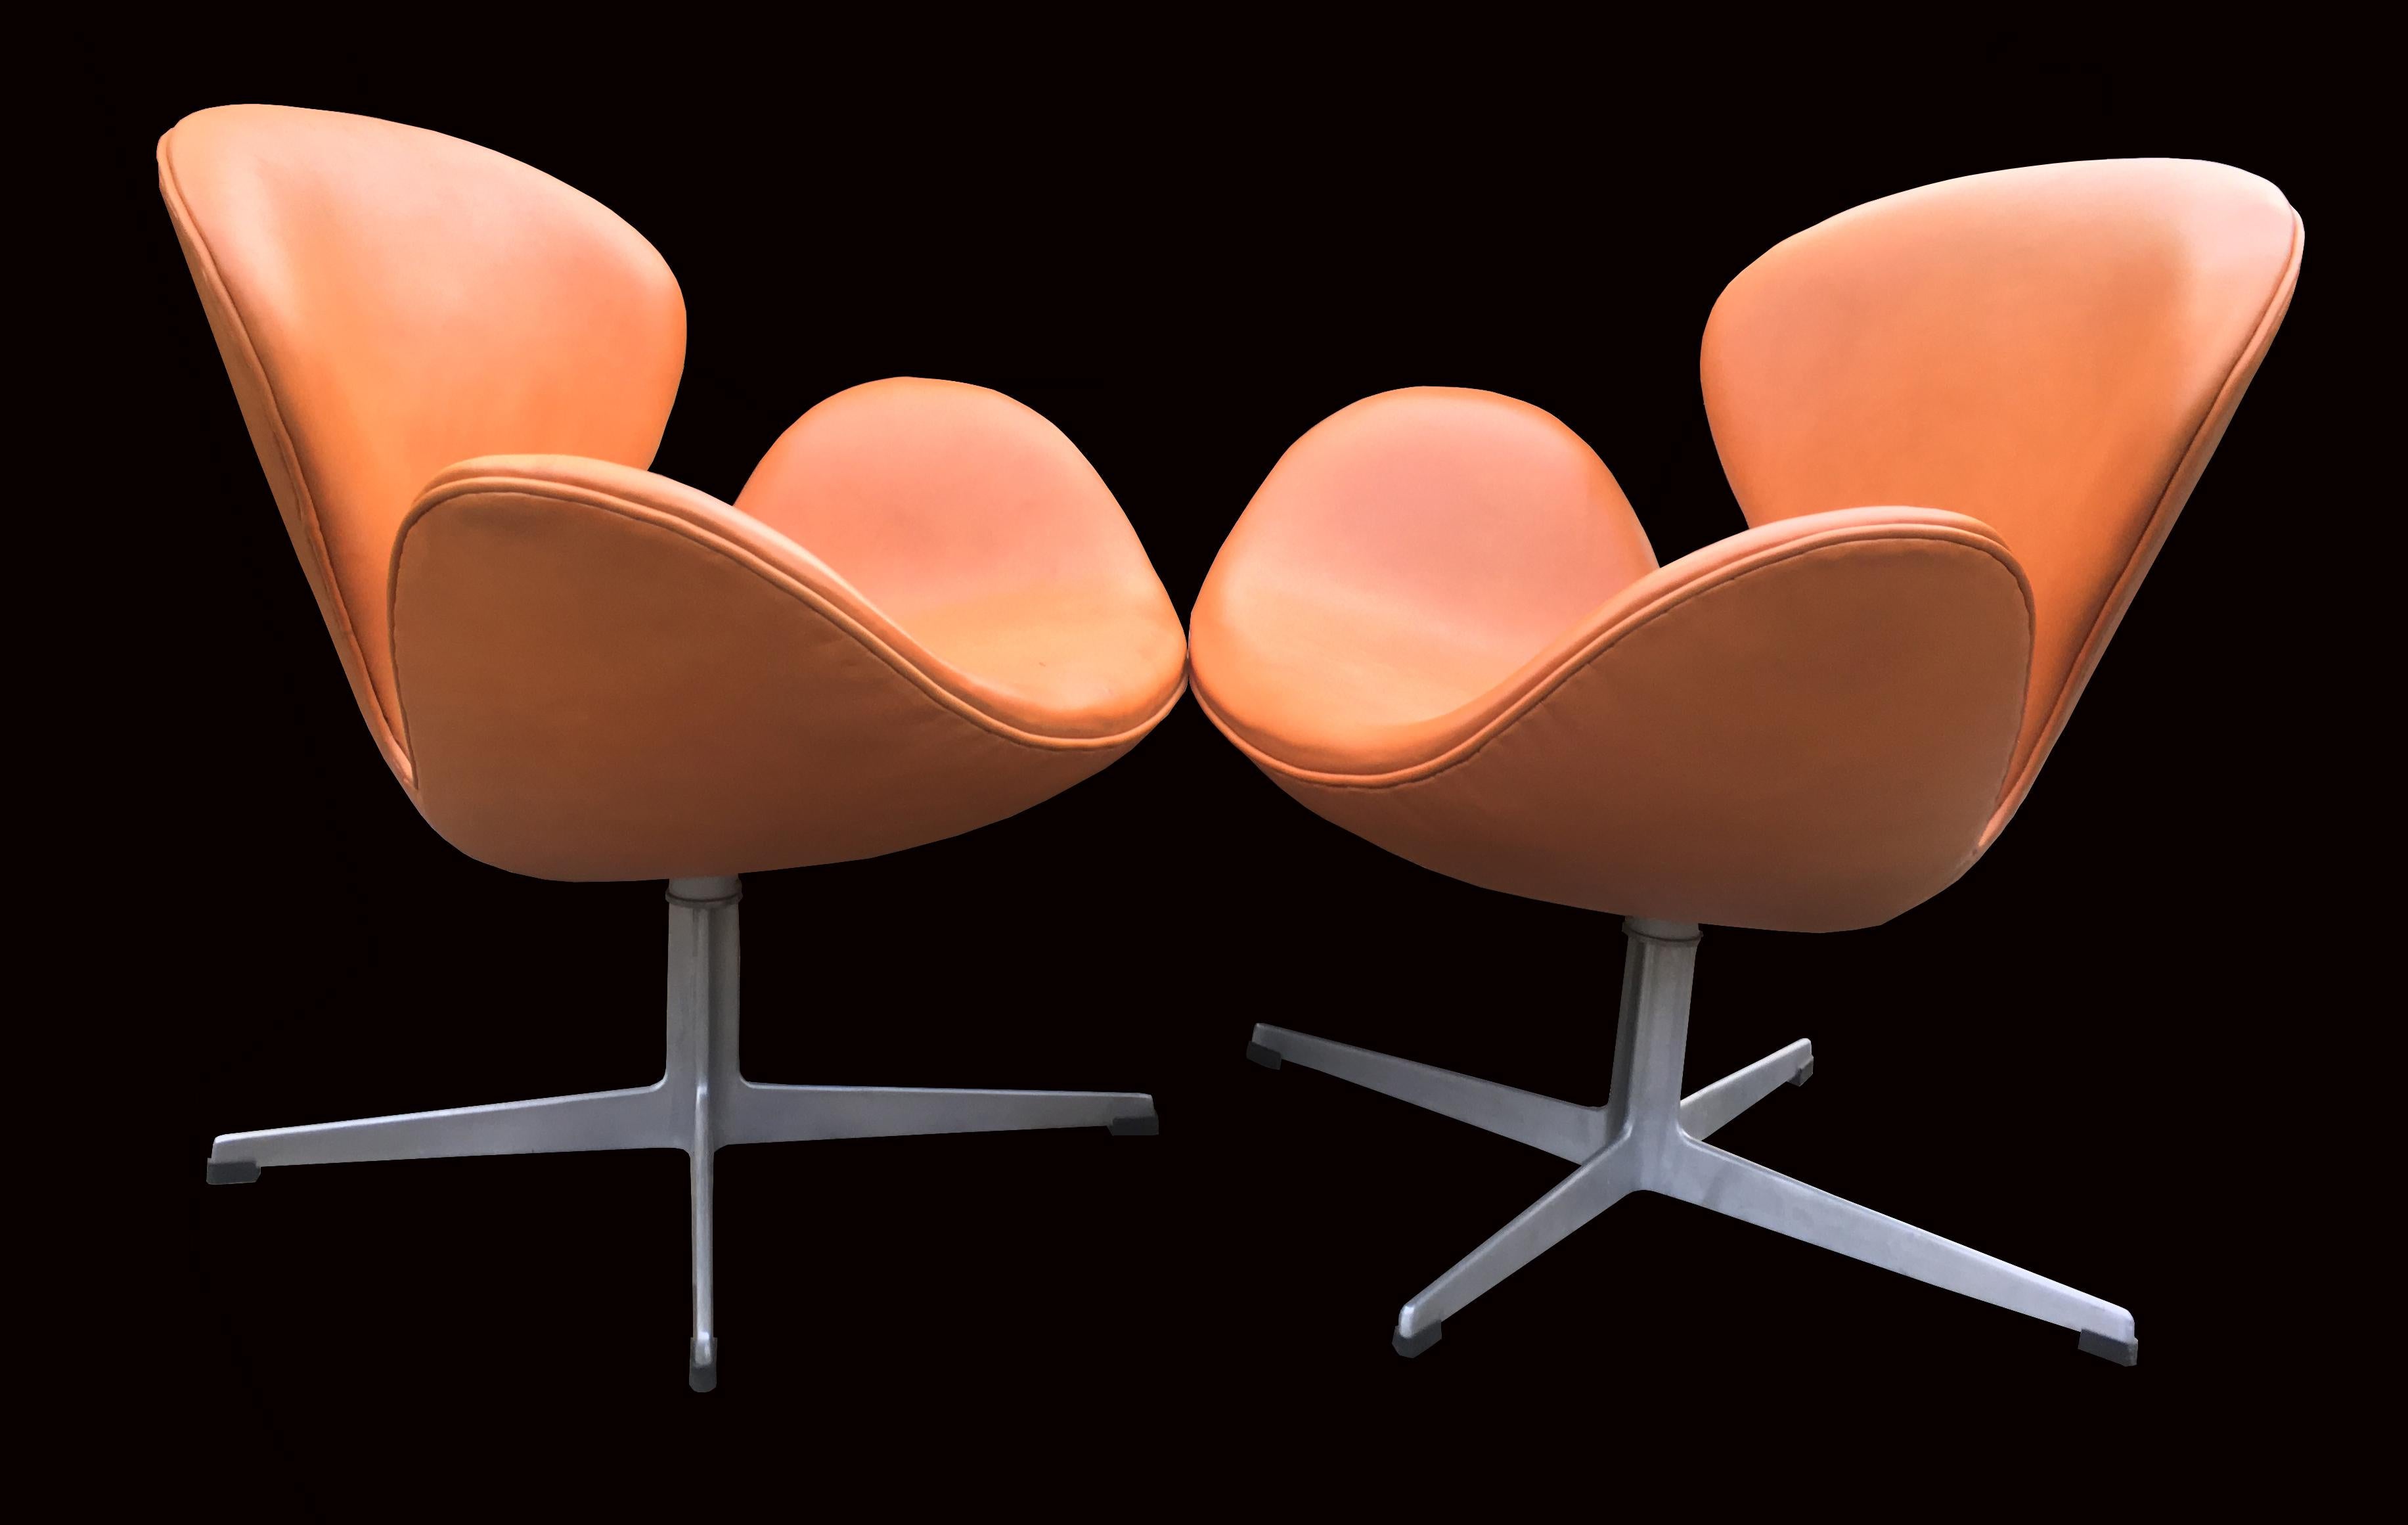 Rare Pair of Cognac Leather Swan Chairs by Arne Jacobsen for Fritz Hansen (20. Jahrhundert)